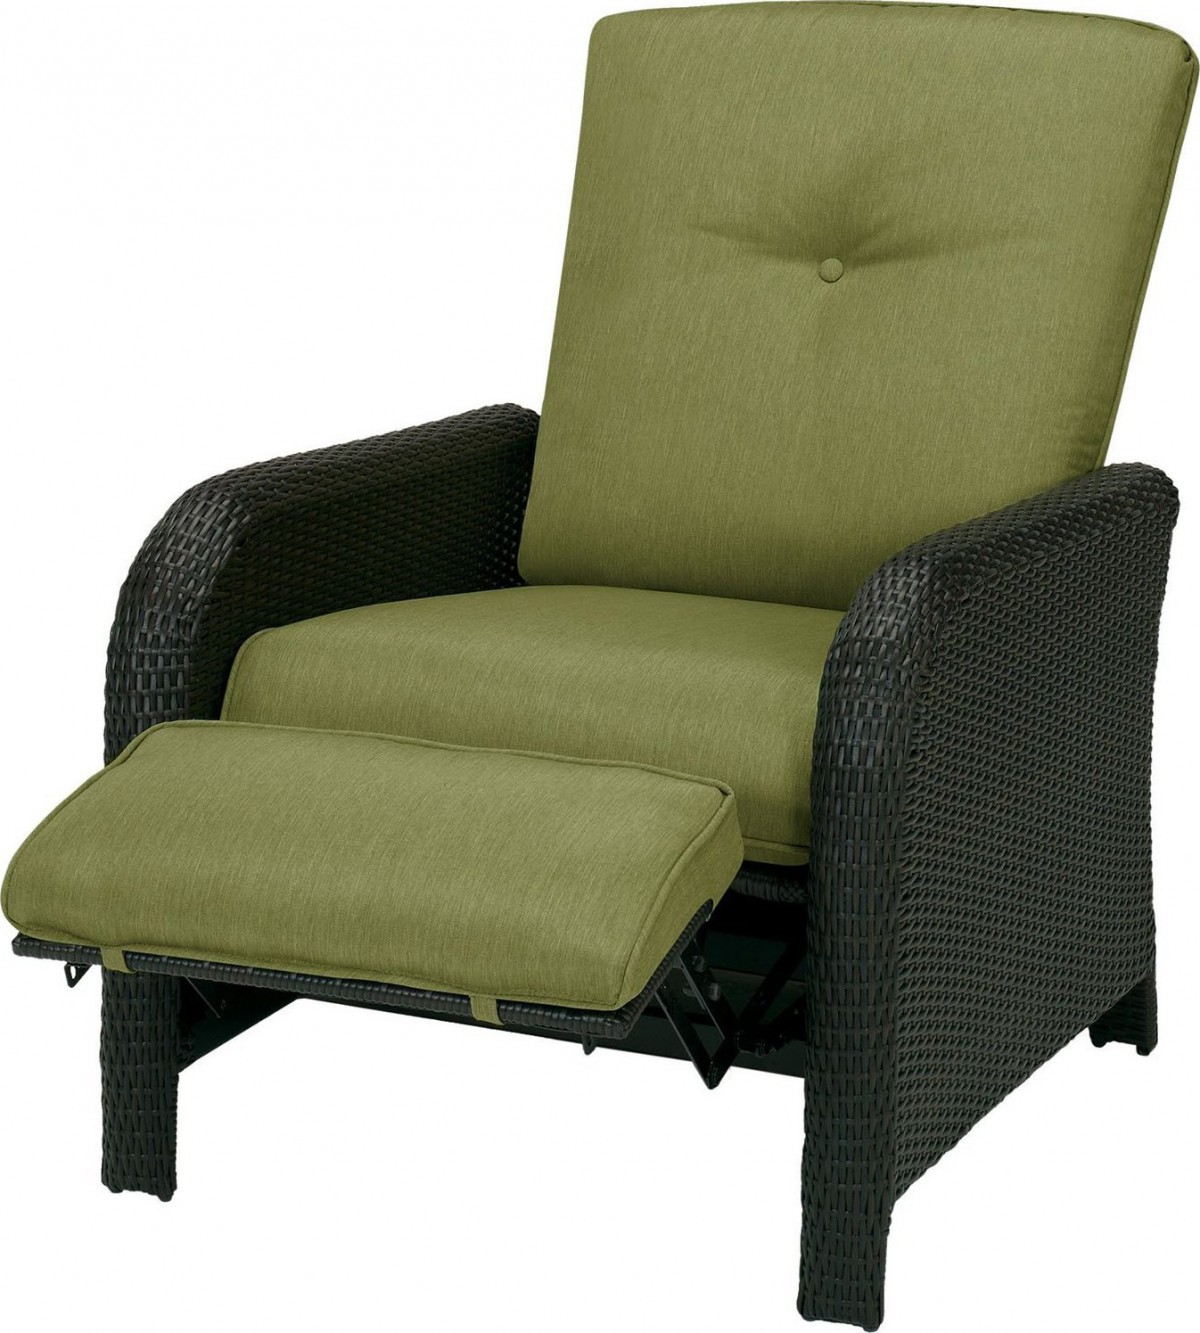 Hanover Strathmere Luxury Wicker Outdoor Recliner Chair